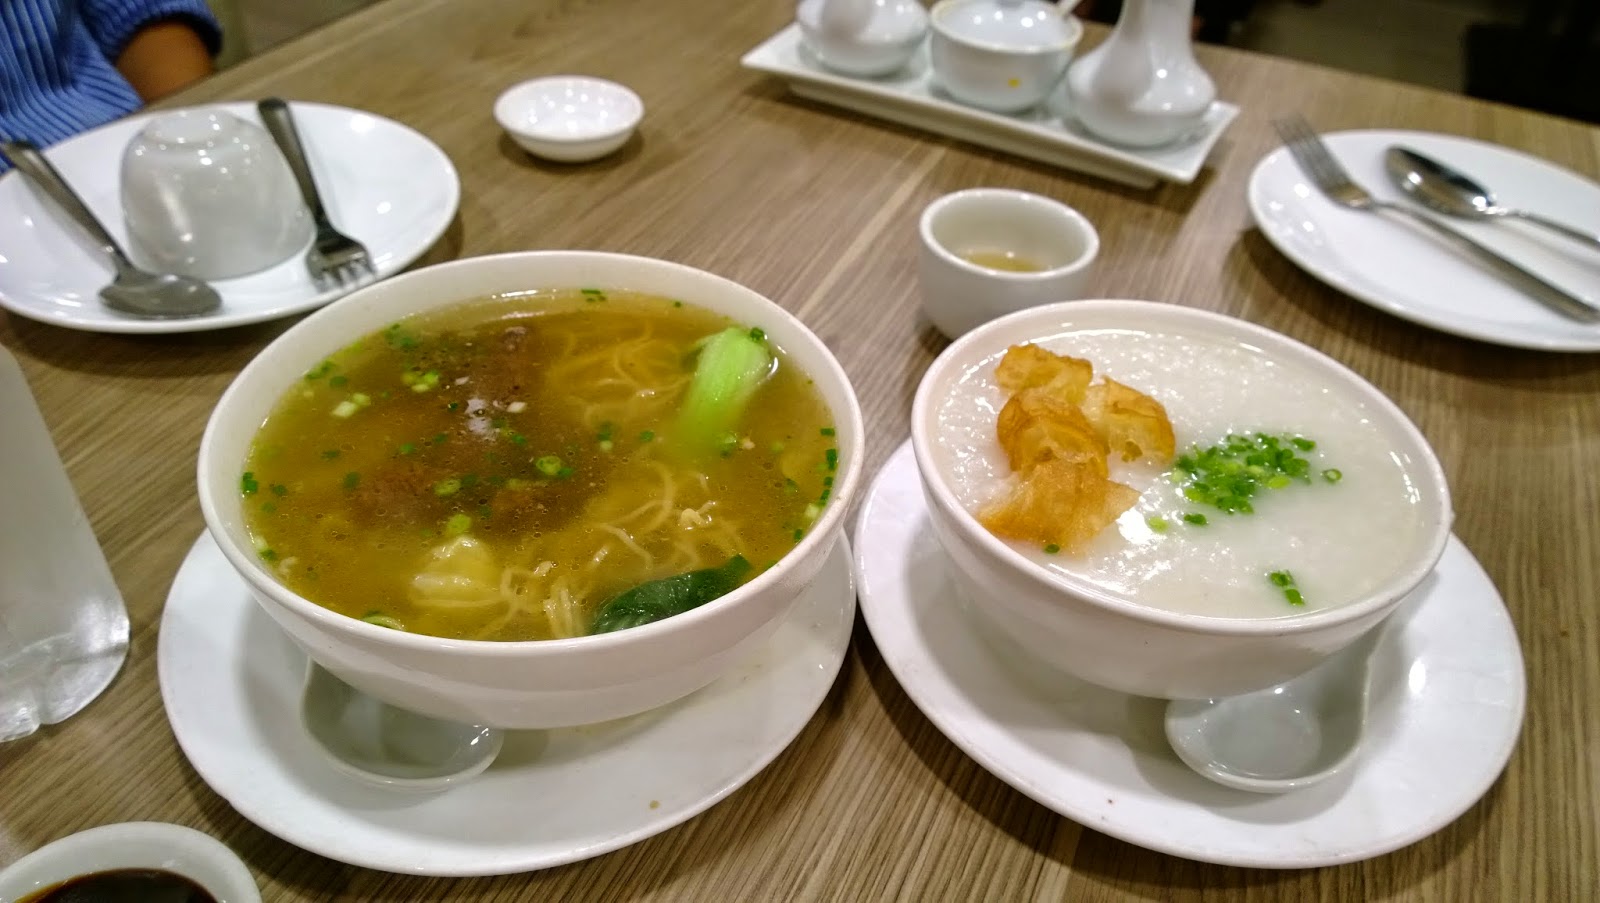 Pork in the Road: Dimsum Breakfast at President Tea House in Binondo